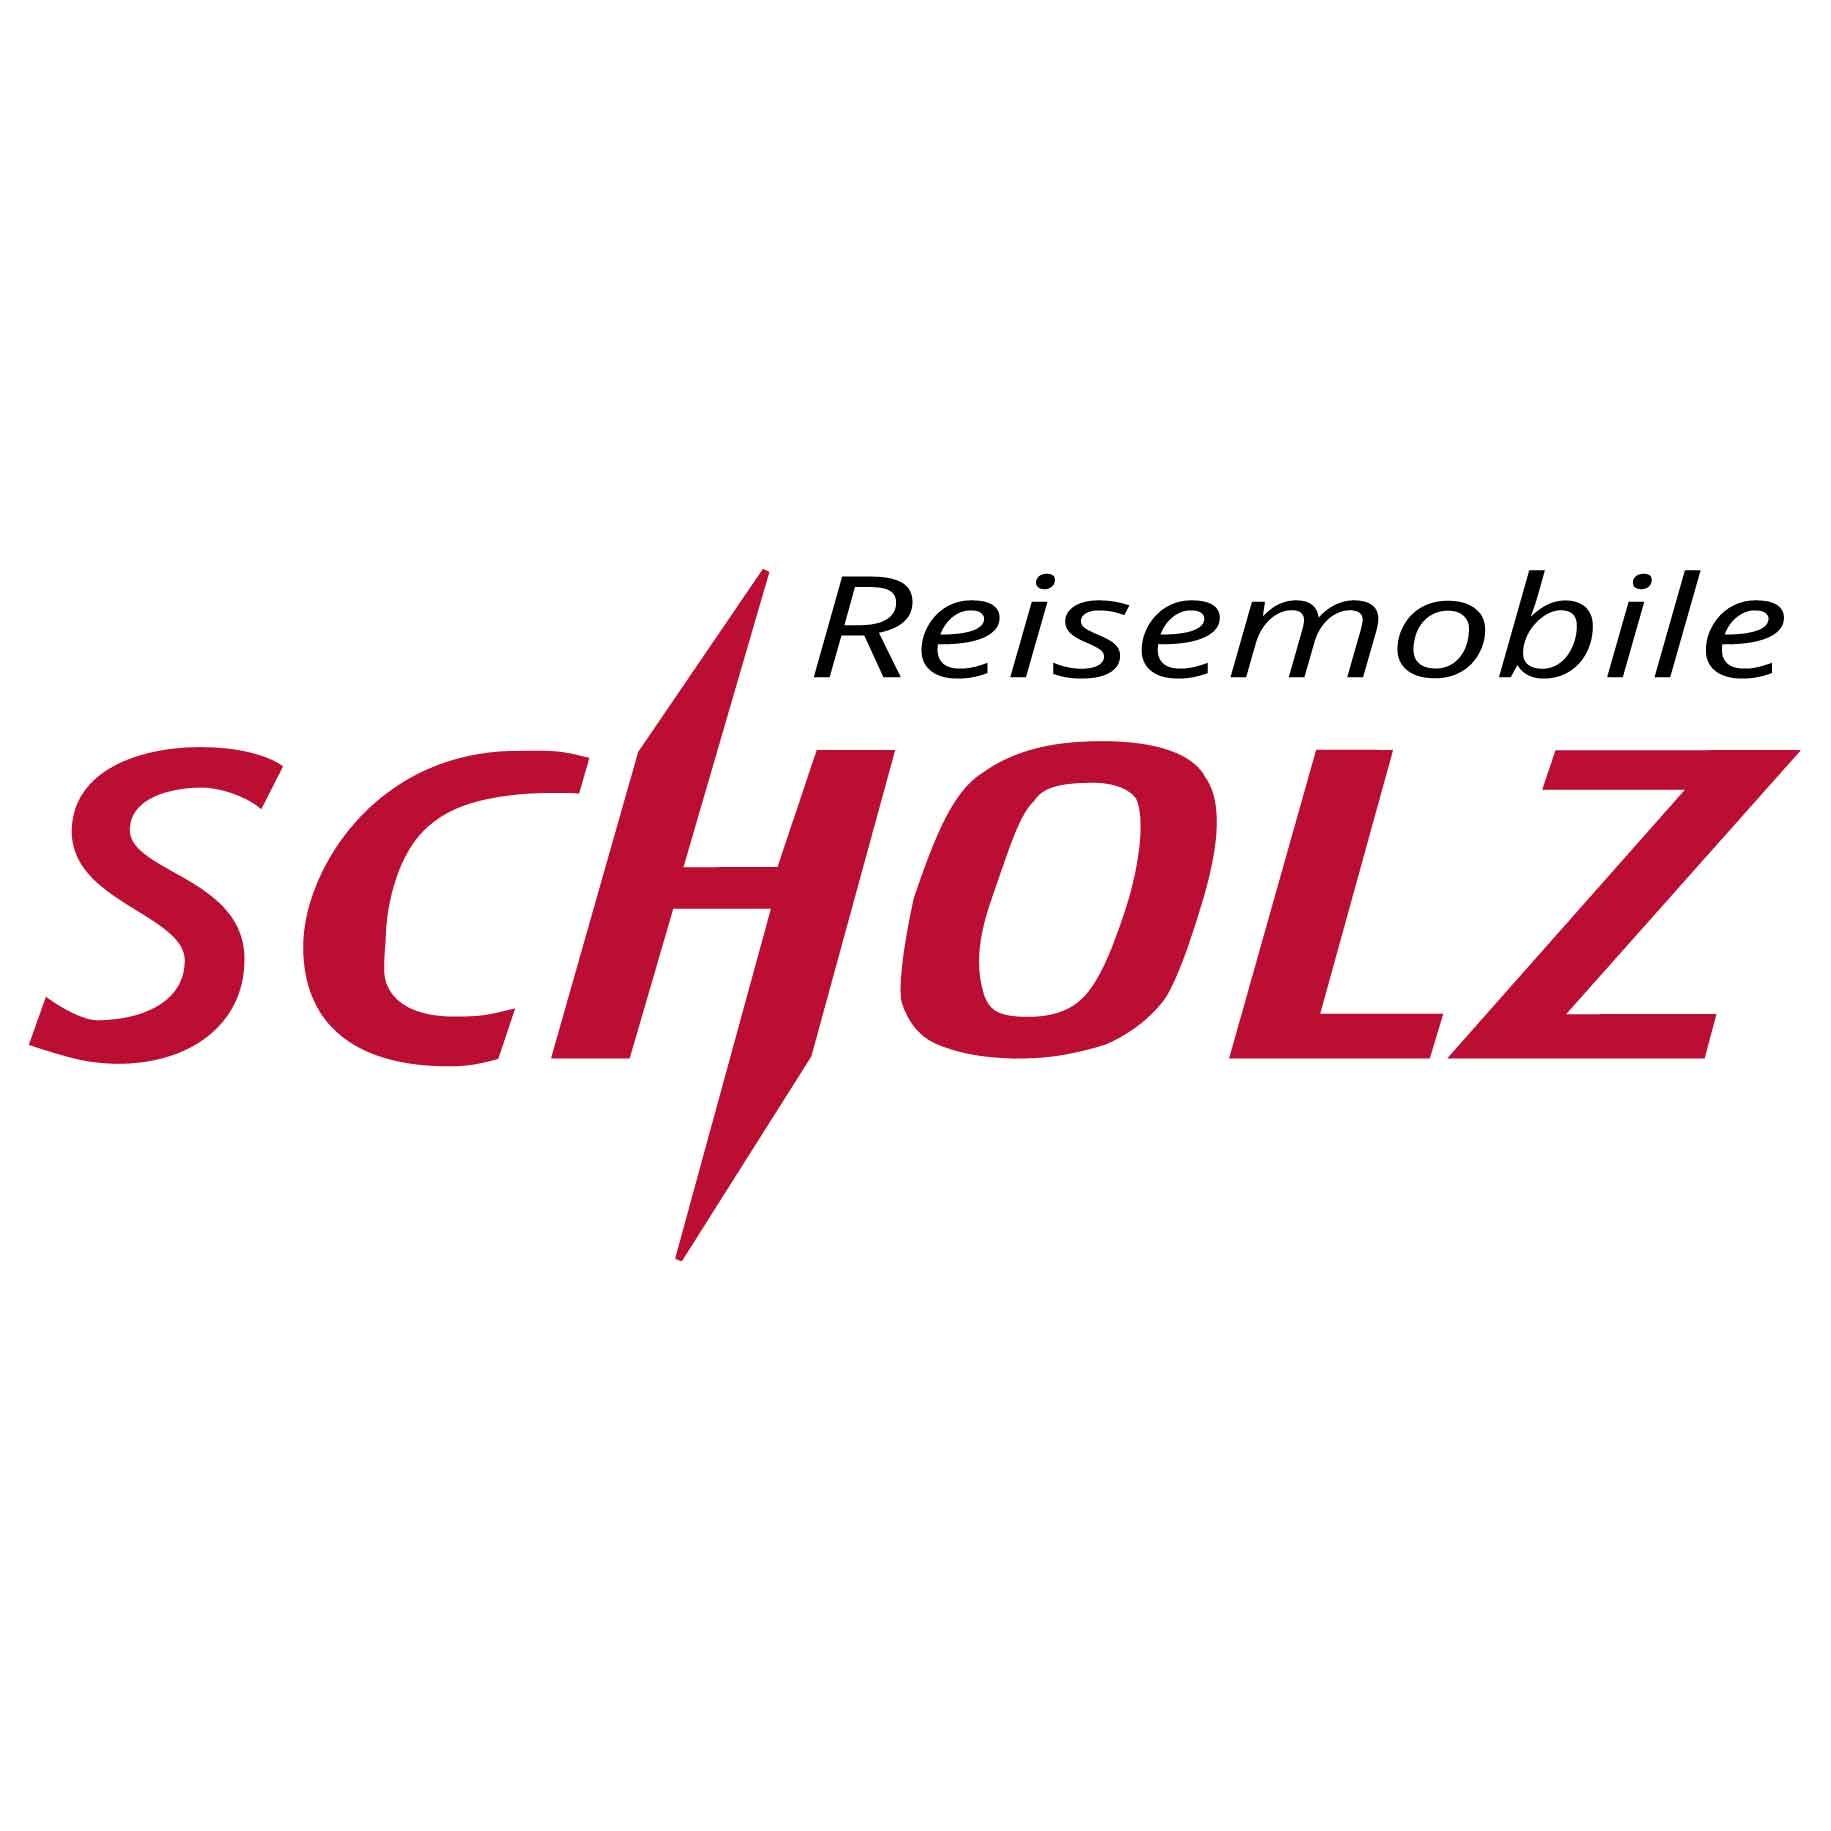 Reisemobile Scholz Logo